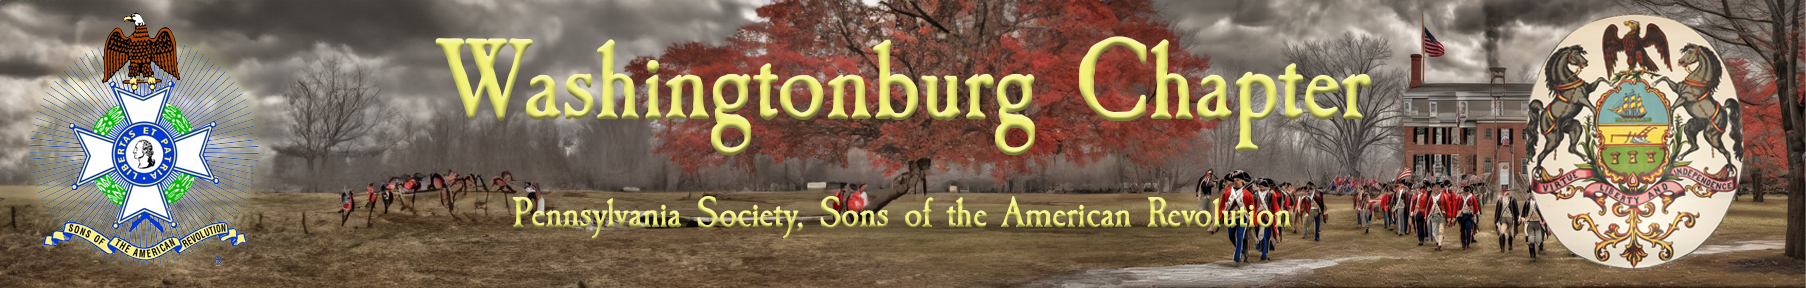 Washingtonburg Chapter, SAR Banner Image 2